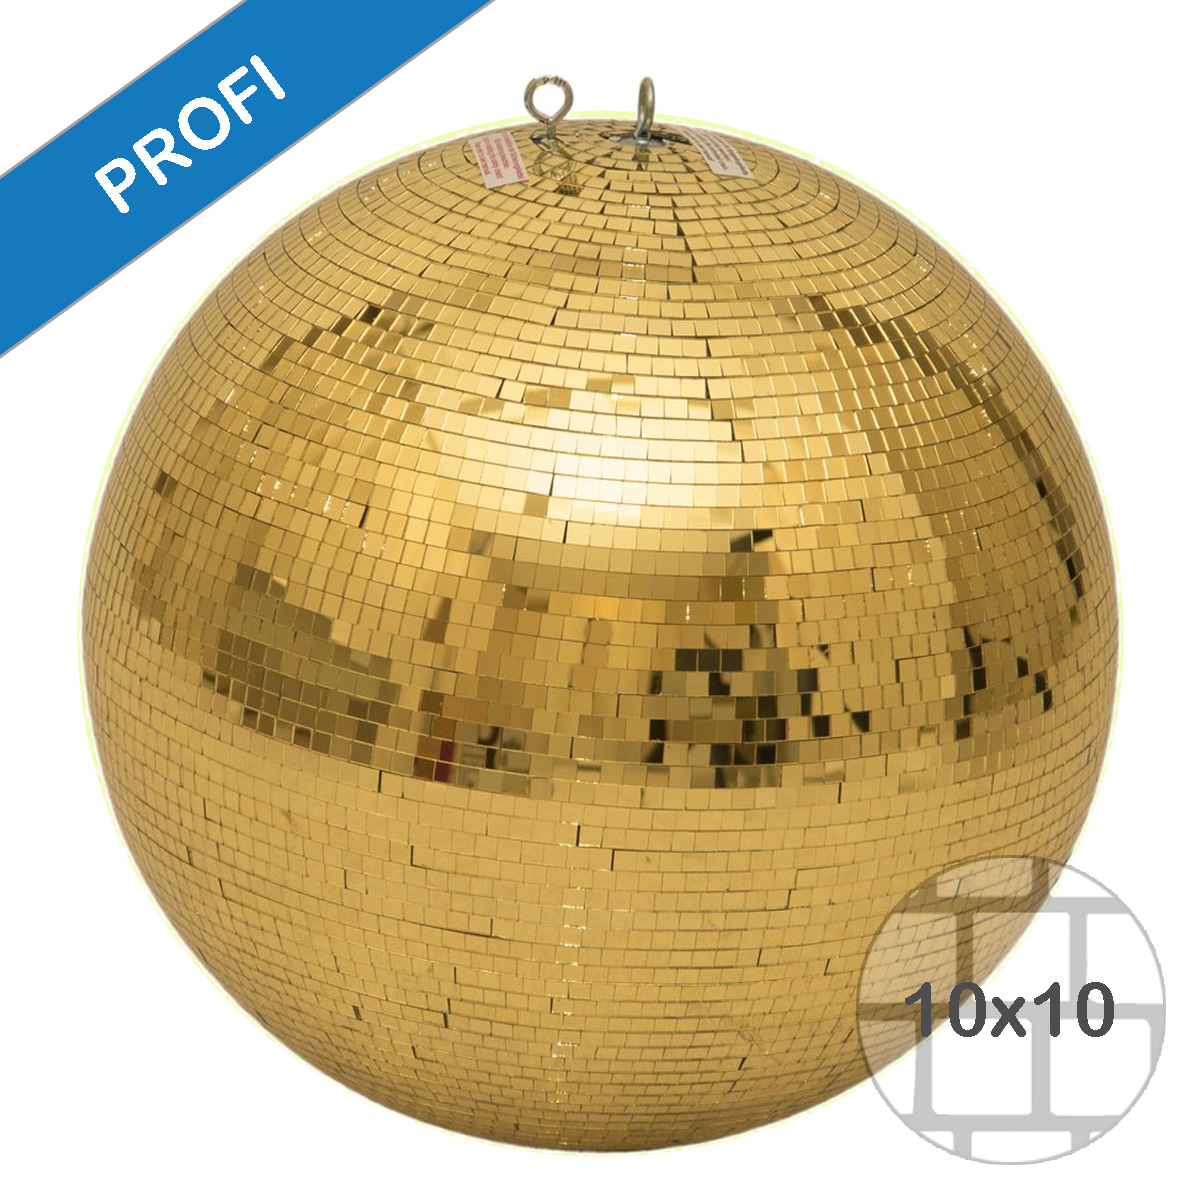 Spiegelkugel 200cm gold- Diskokugel (Discokugel) Party Lichteffekt - Echtglas - mirrorball safety gold color